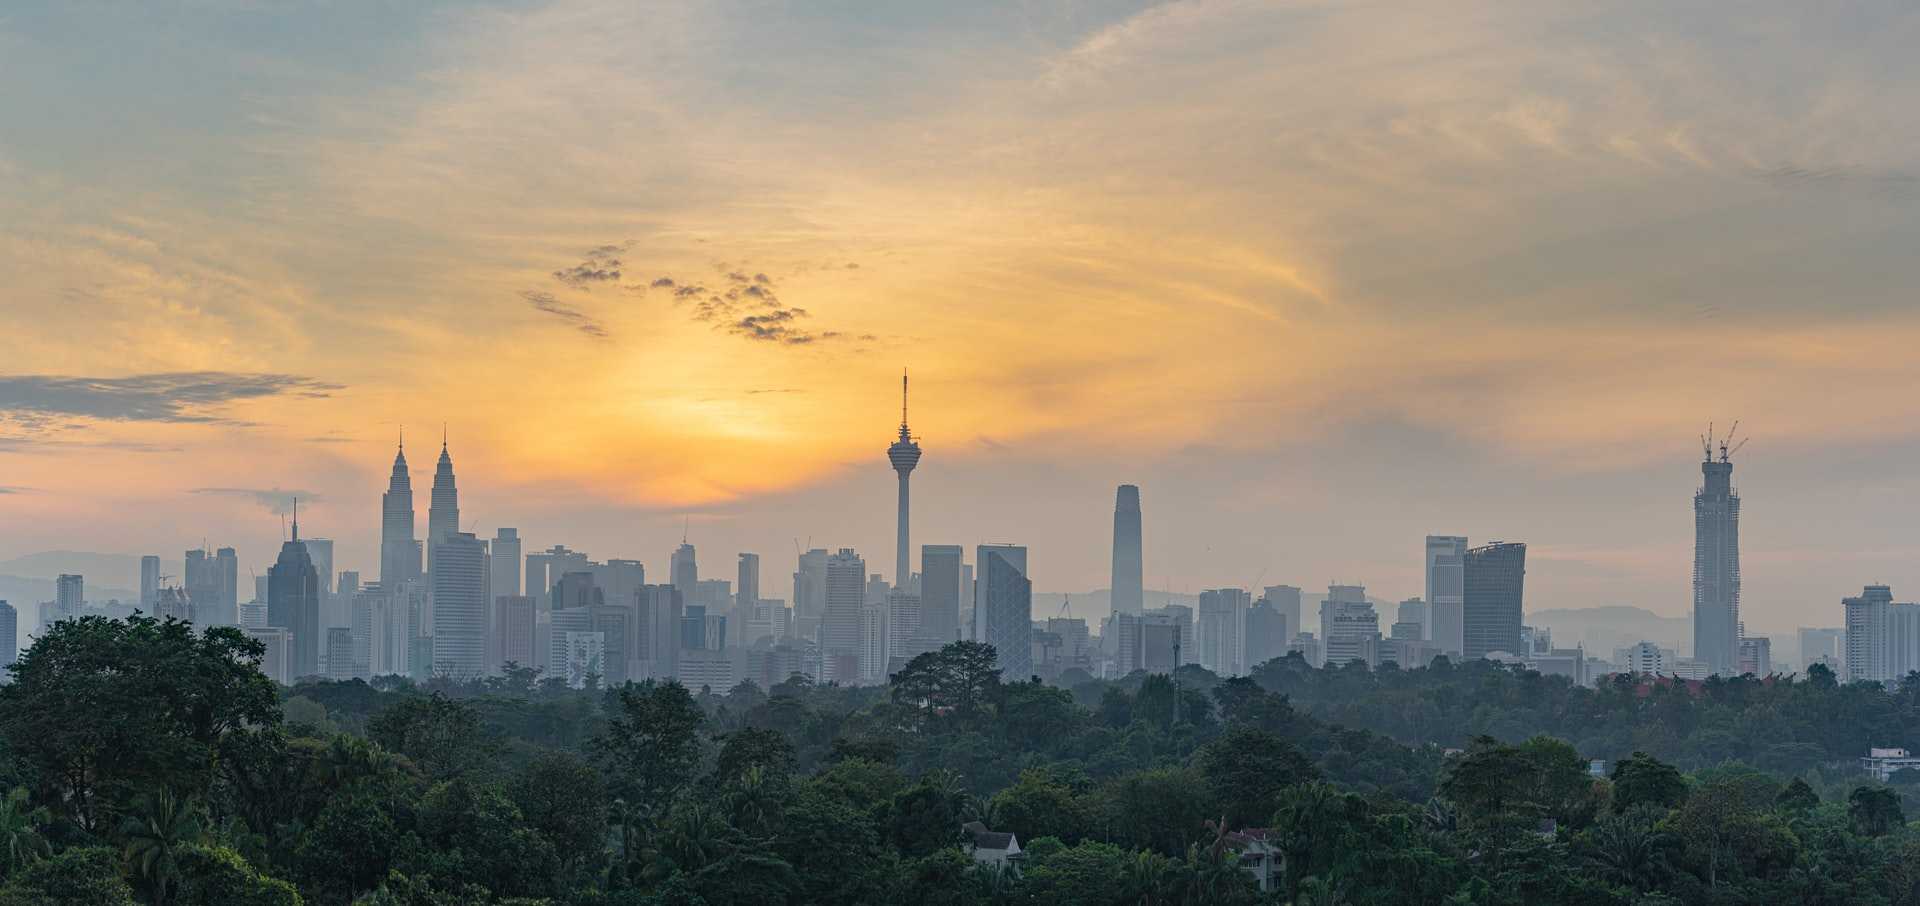 The skyline of Kuala Lumpur at dawn.